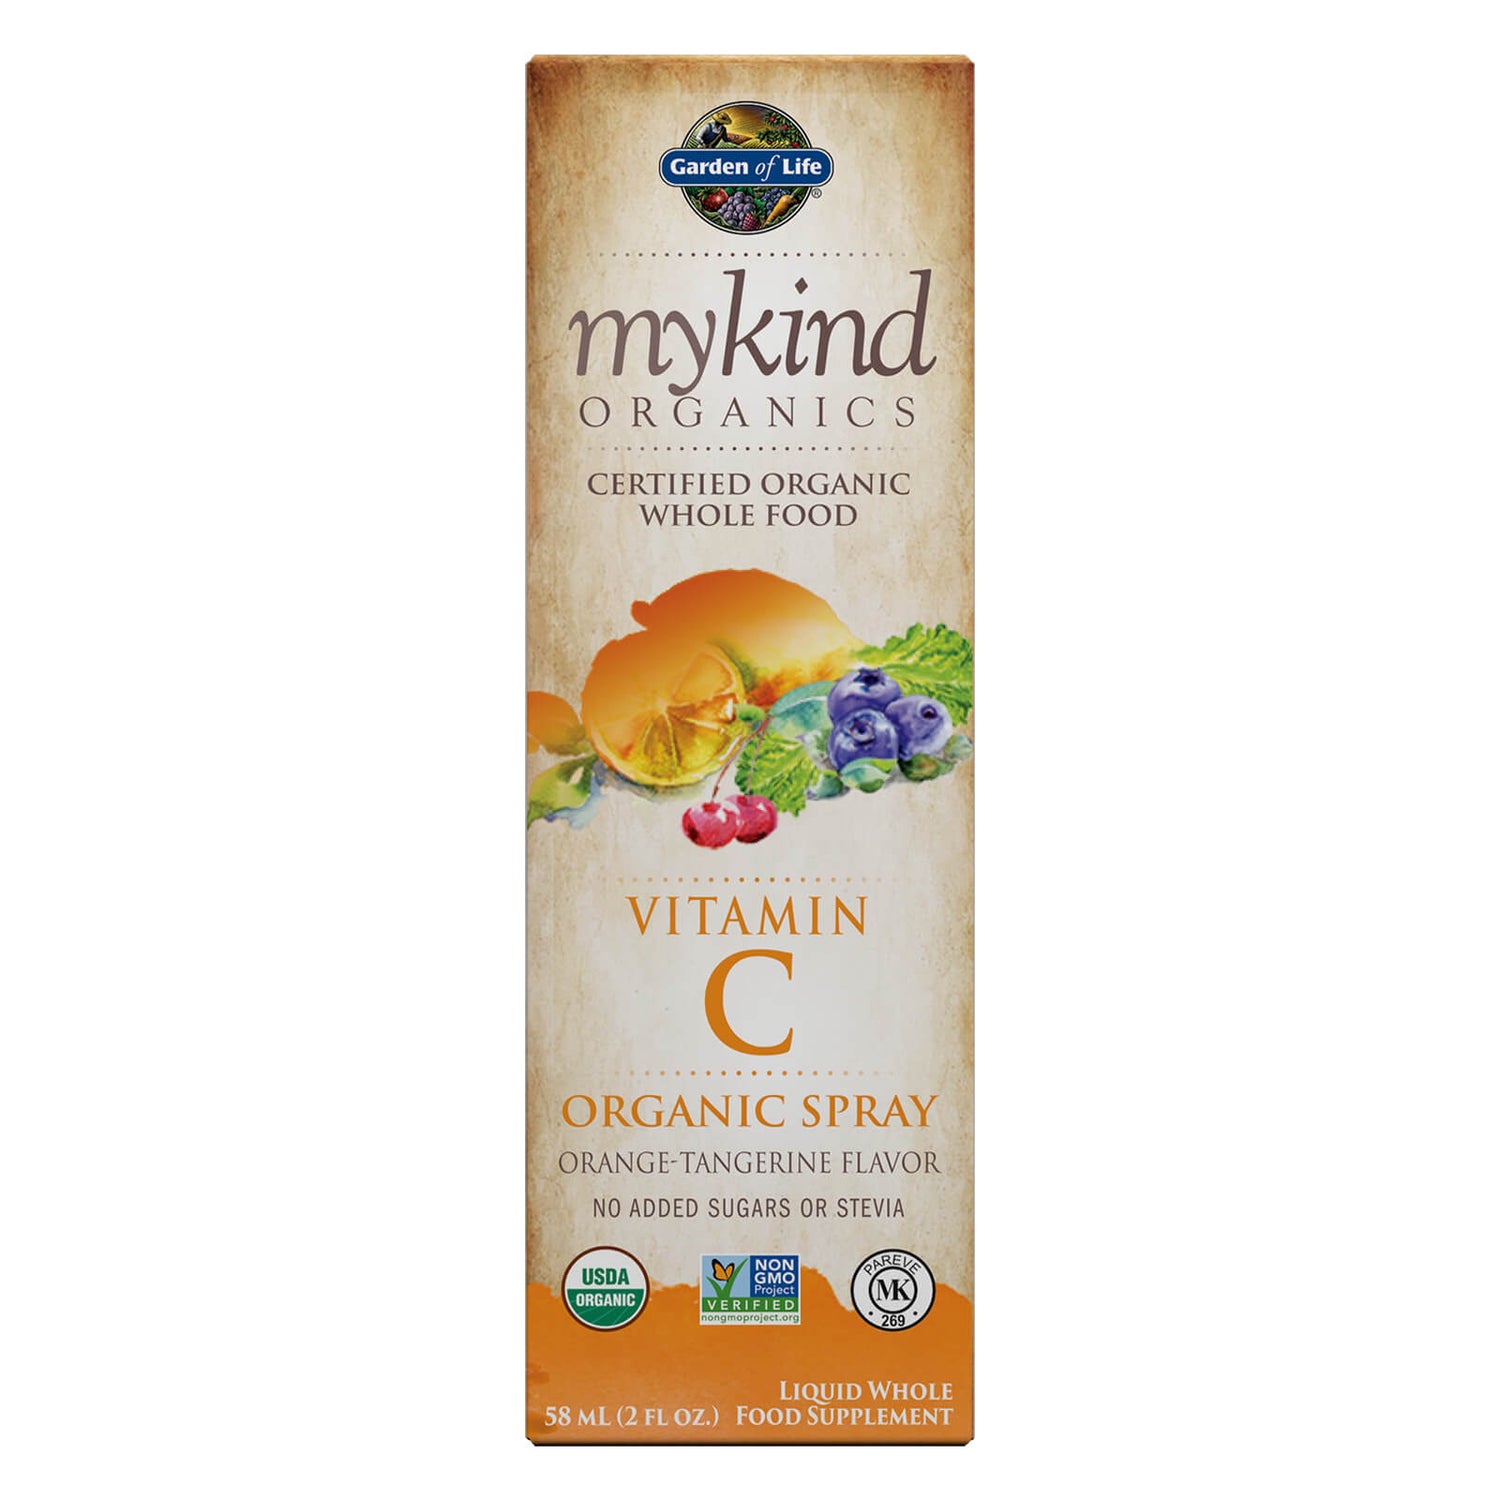 mykind Organics Vitamin C Spray - Orange Tangerine - 58ml